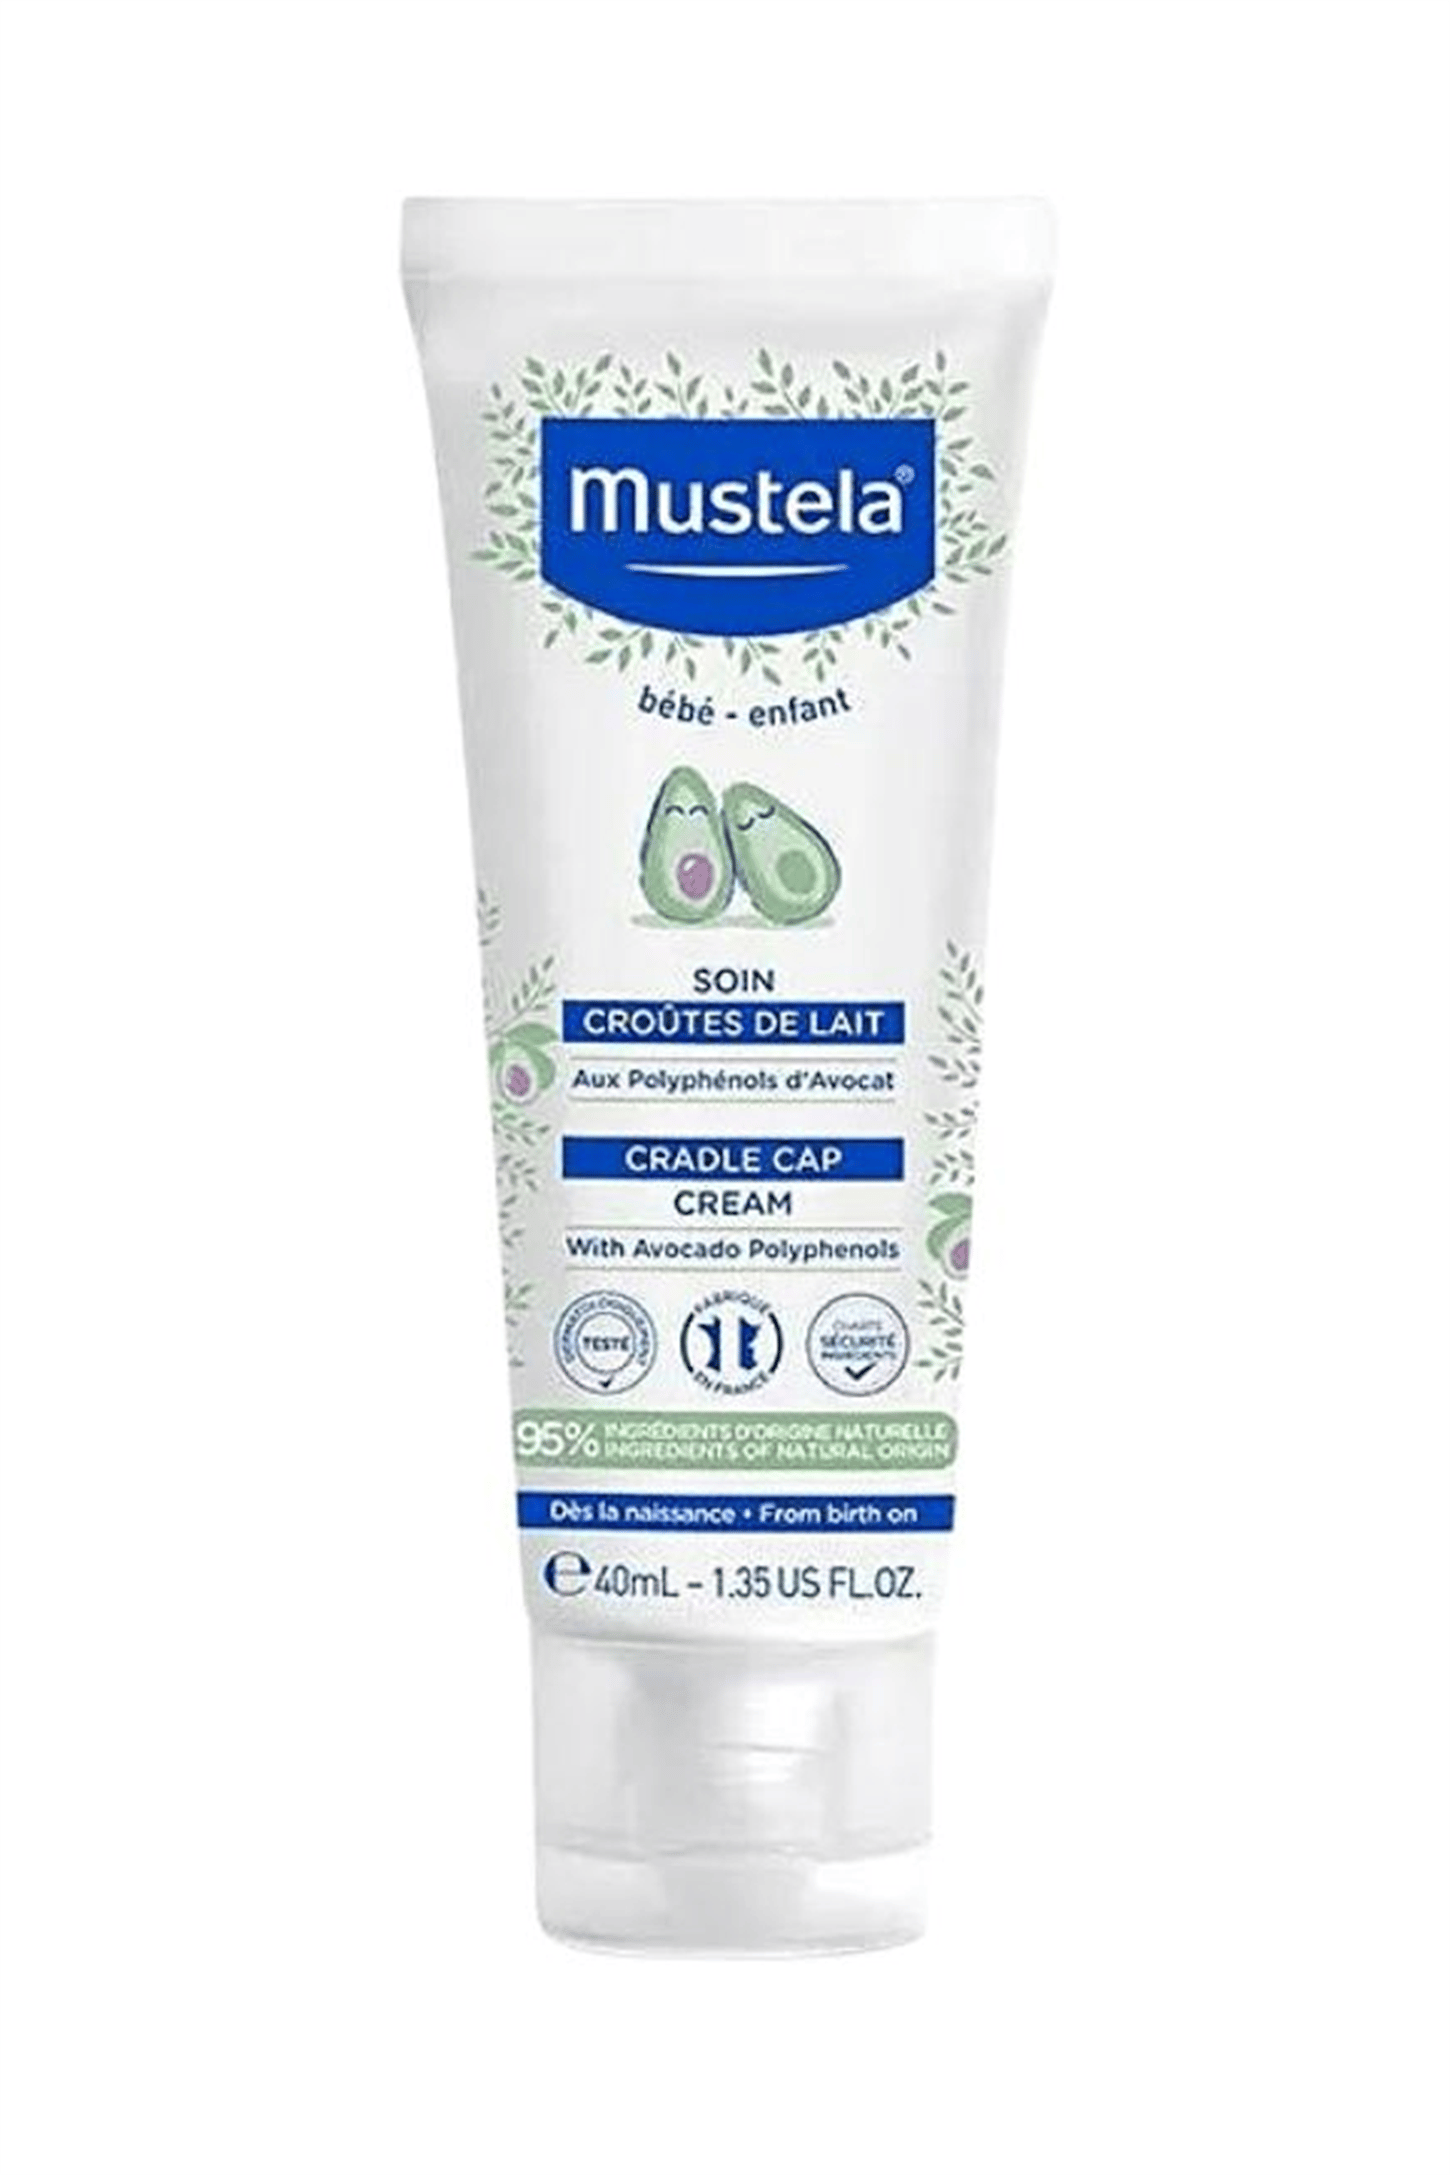 Mustela Cradle Cap Cream 40ml - Saç Bakım Kremi | EczanemveBen.com